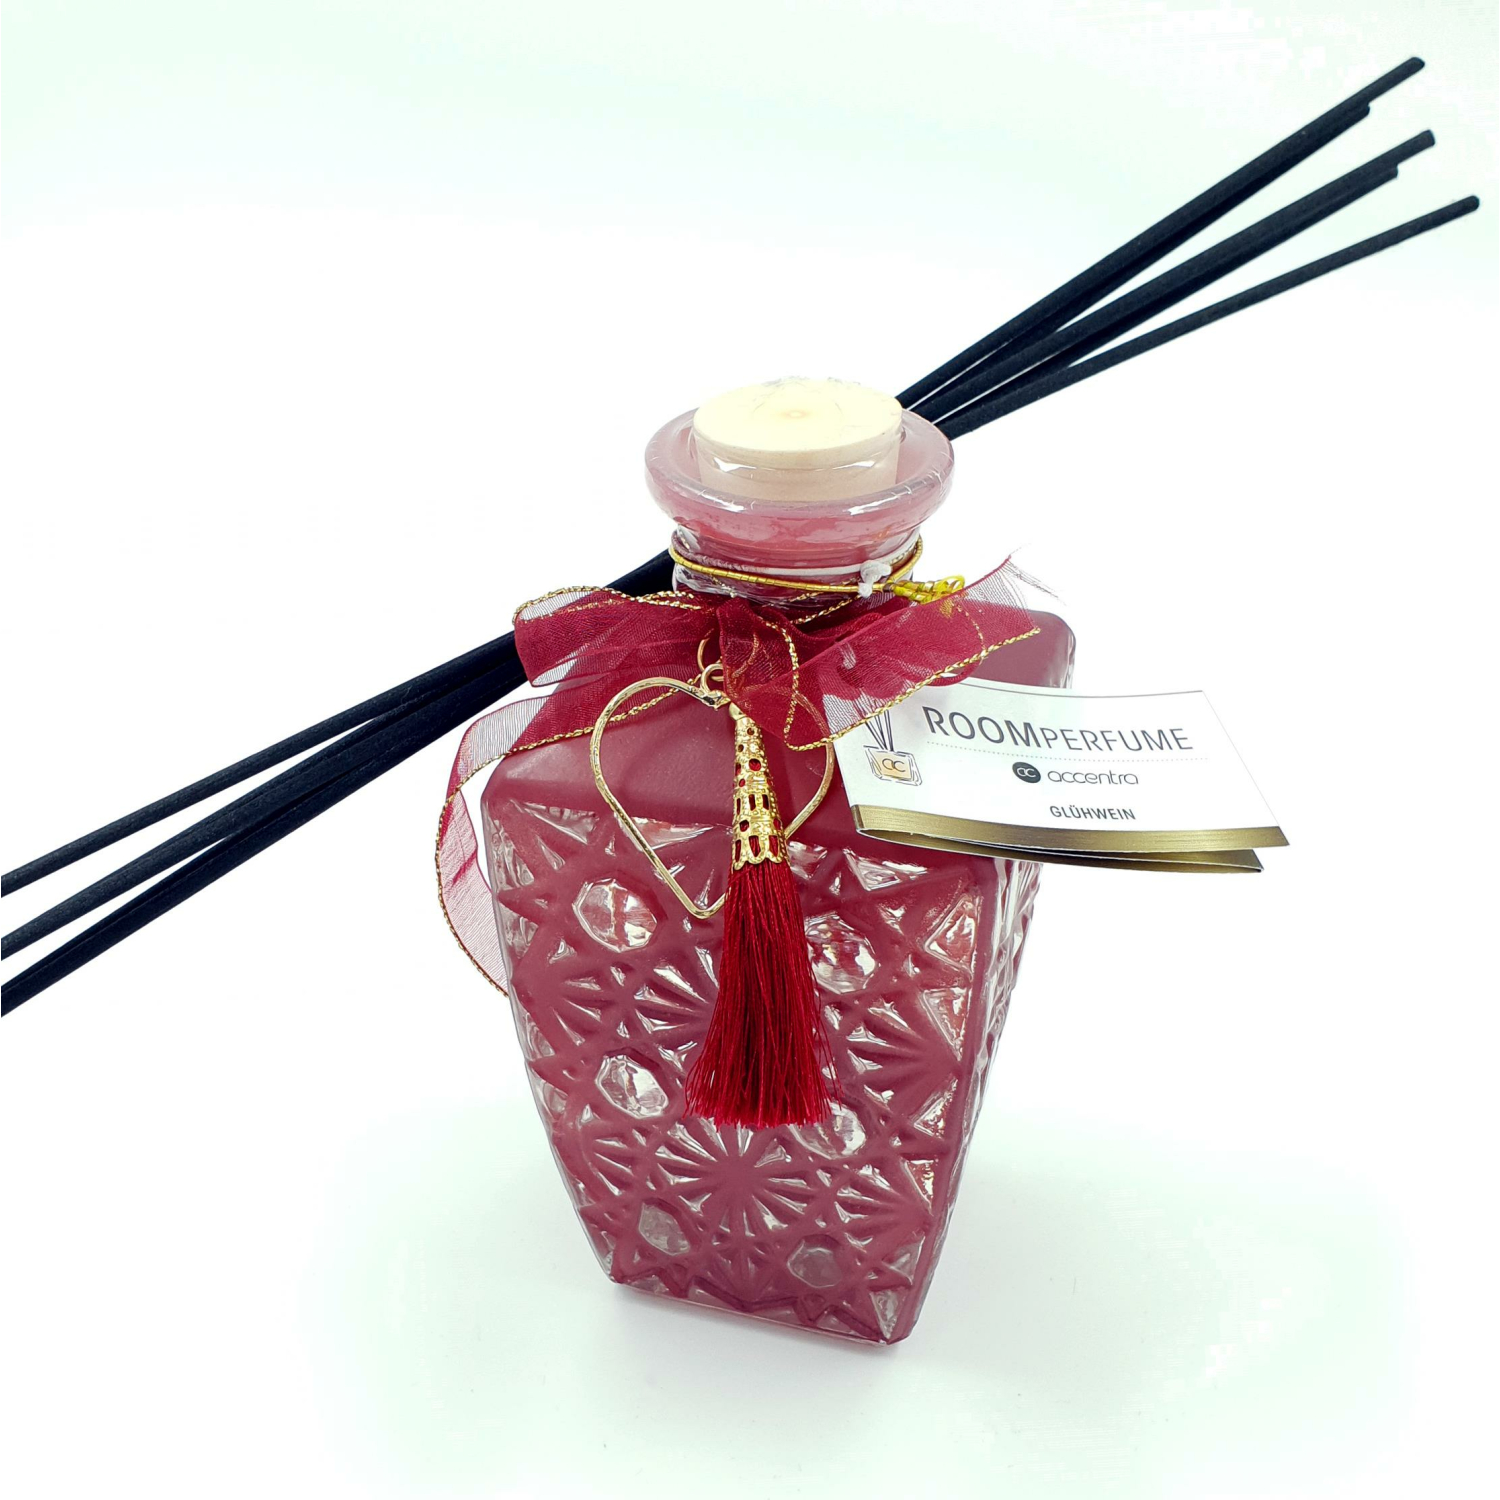 https://www.onshop24.eu/media/image/product/6289/lg/raumduft-gluehwein-raum-parfum-hello-winter-diffuser-glasflasche-mir-fraesmuster.jpg